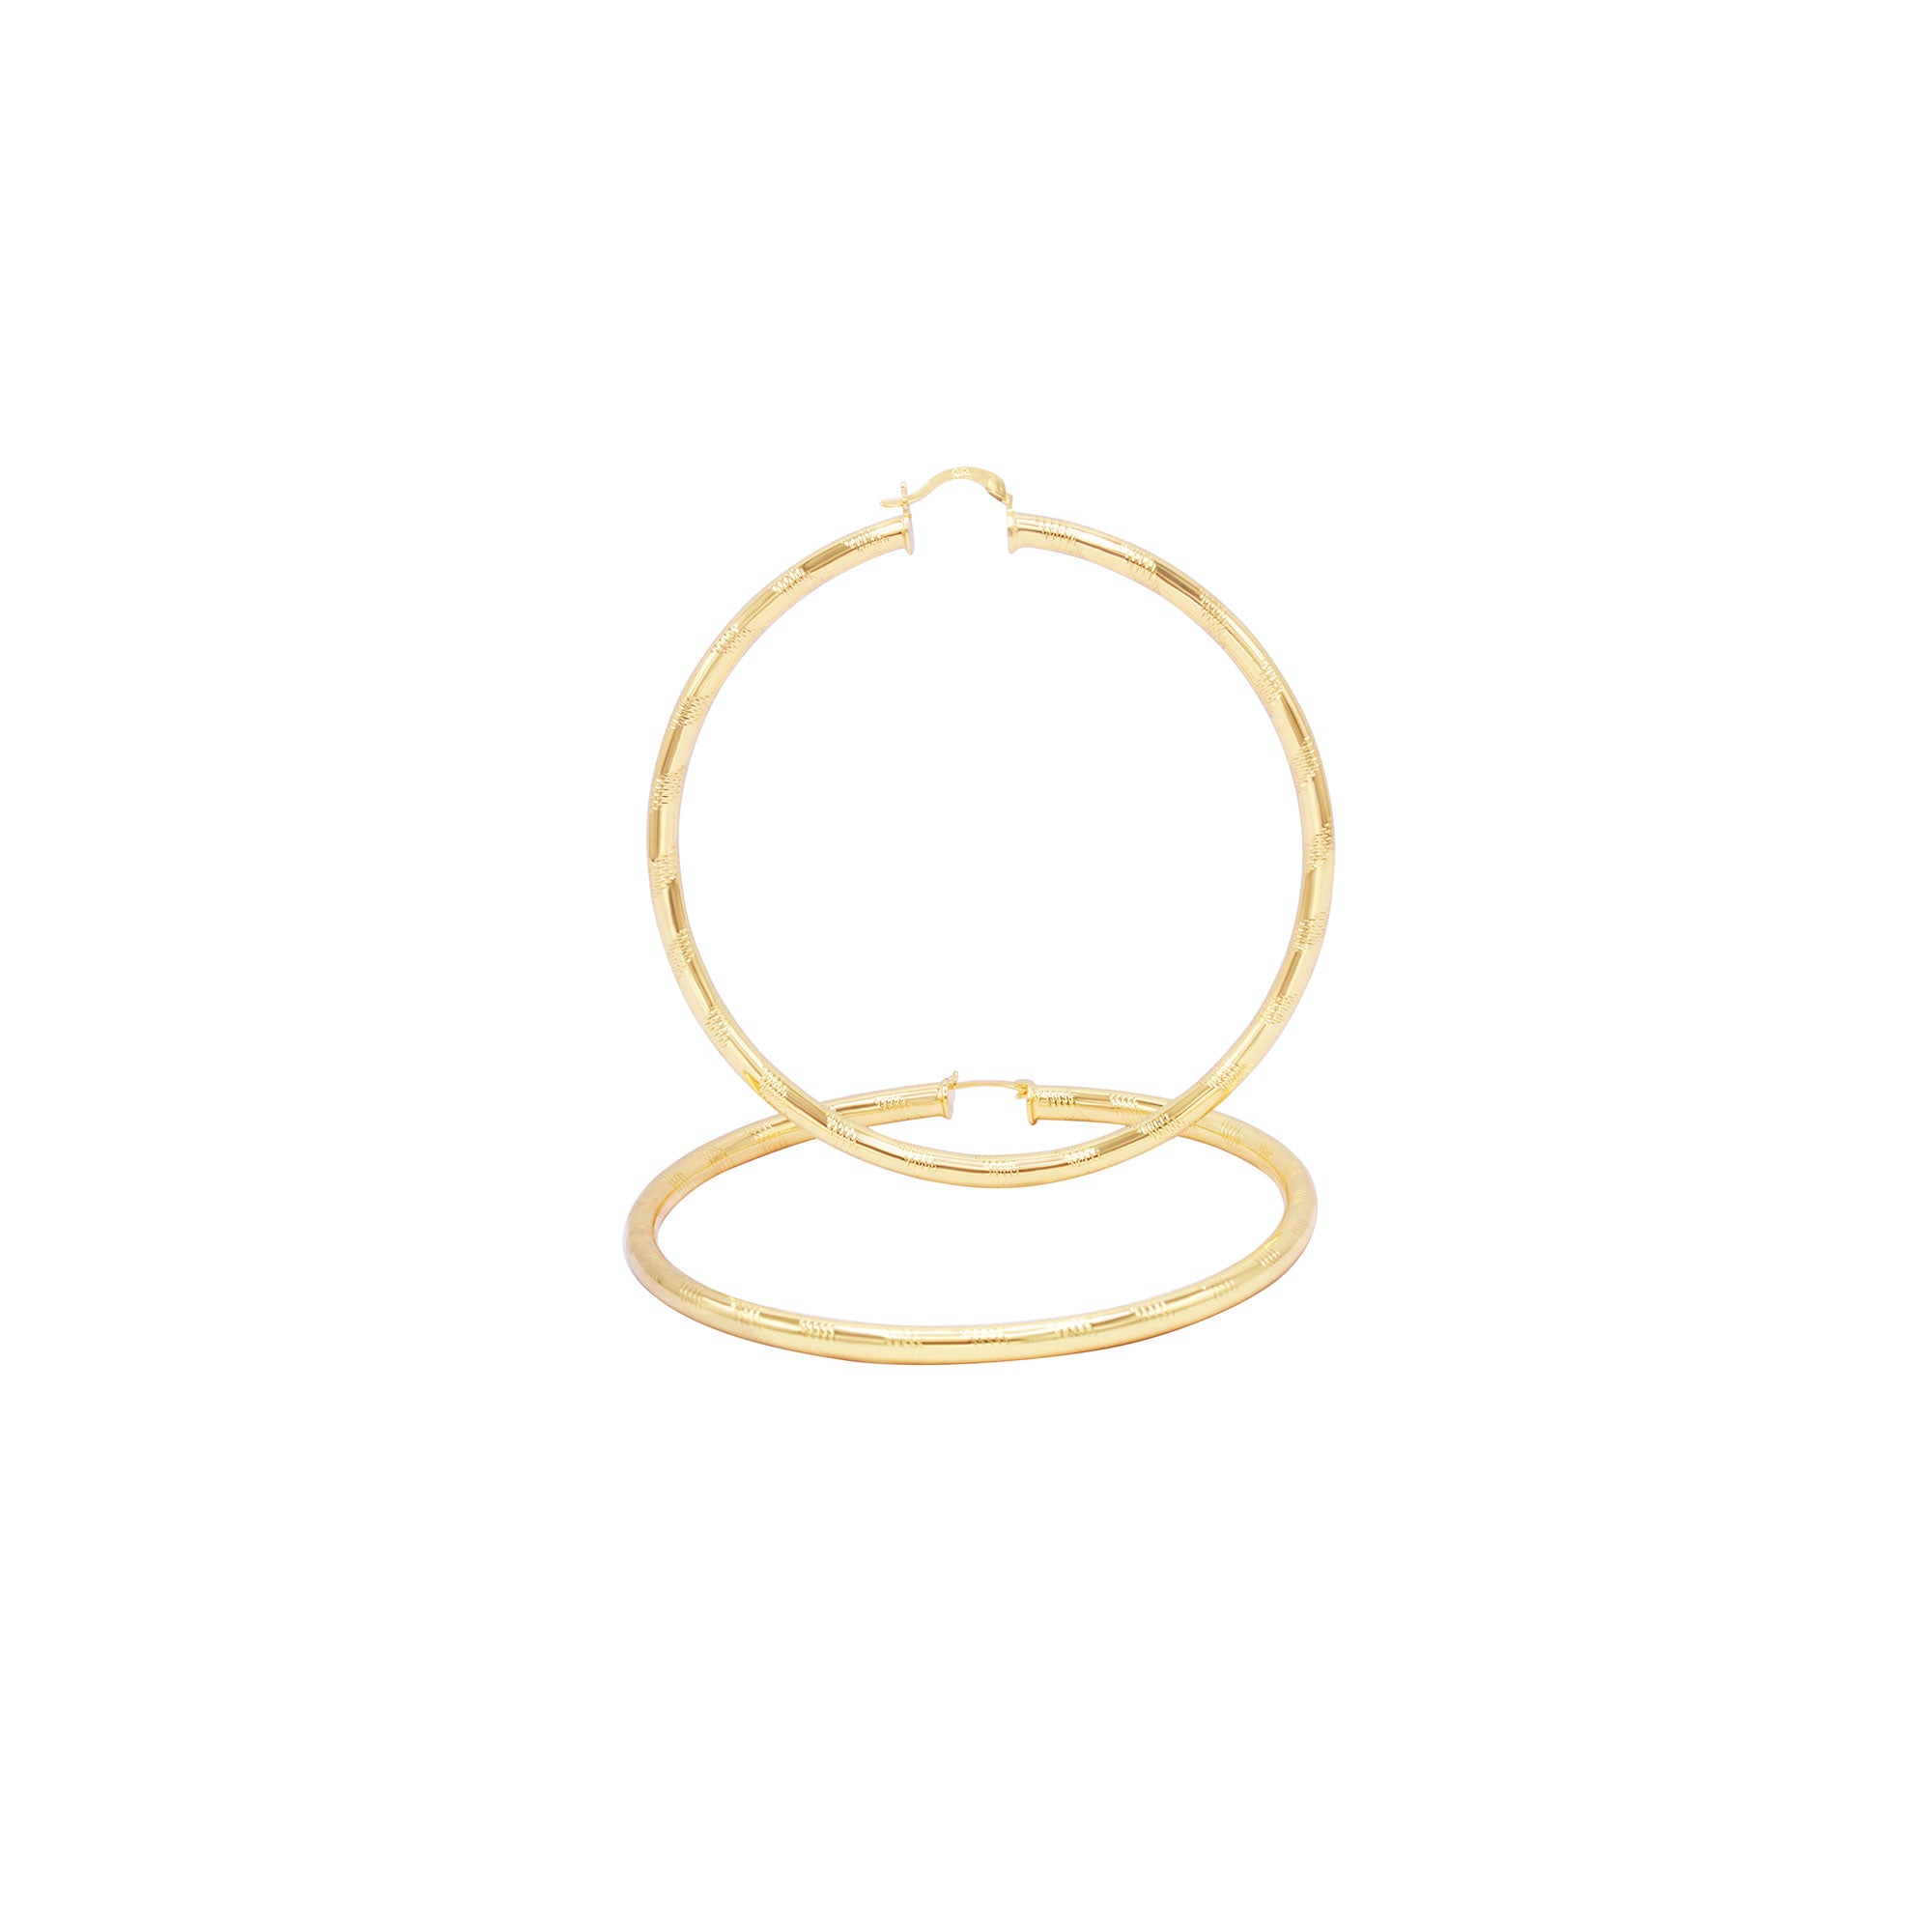 Slit Cut 14K Gold-Filled Hoop Earrings For Women 25 - 80 mm